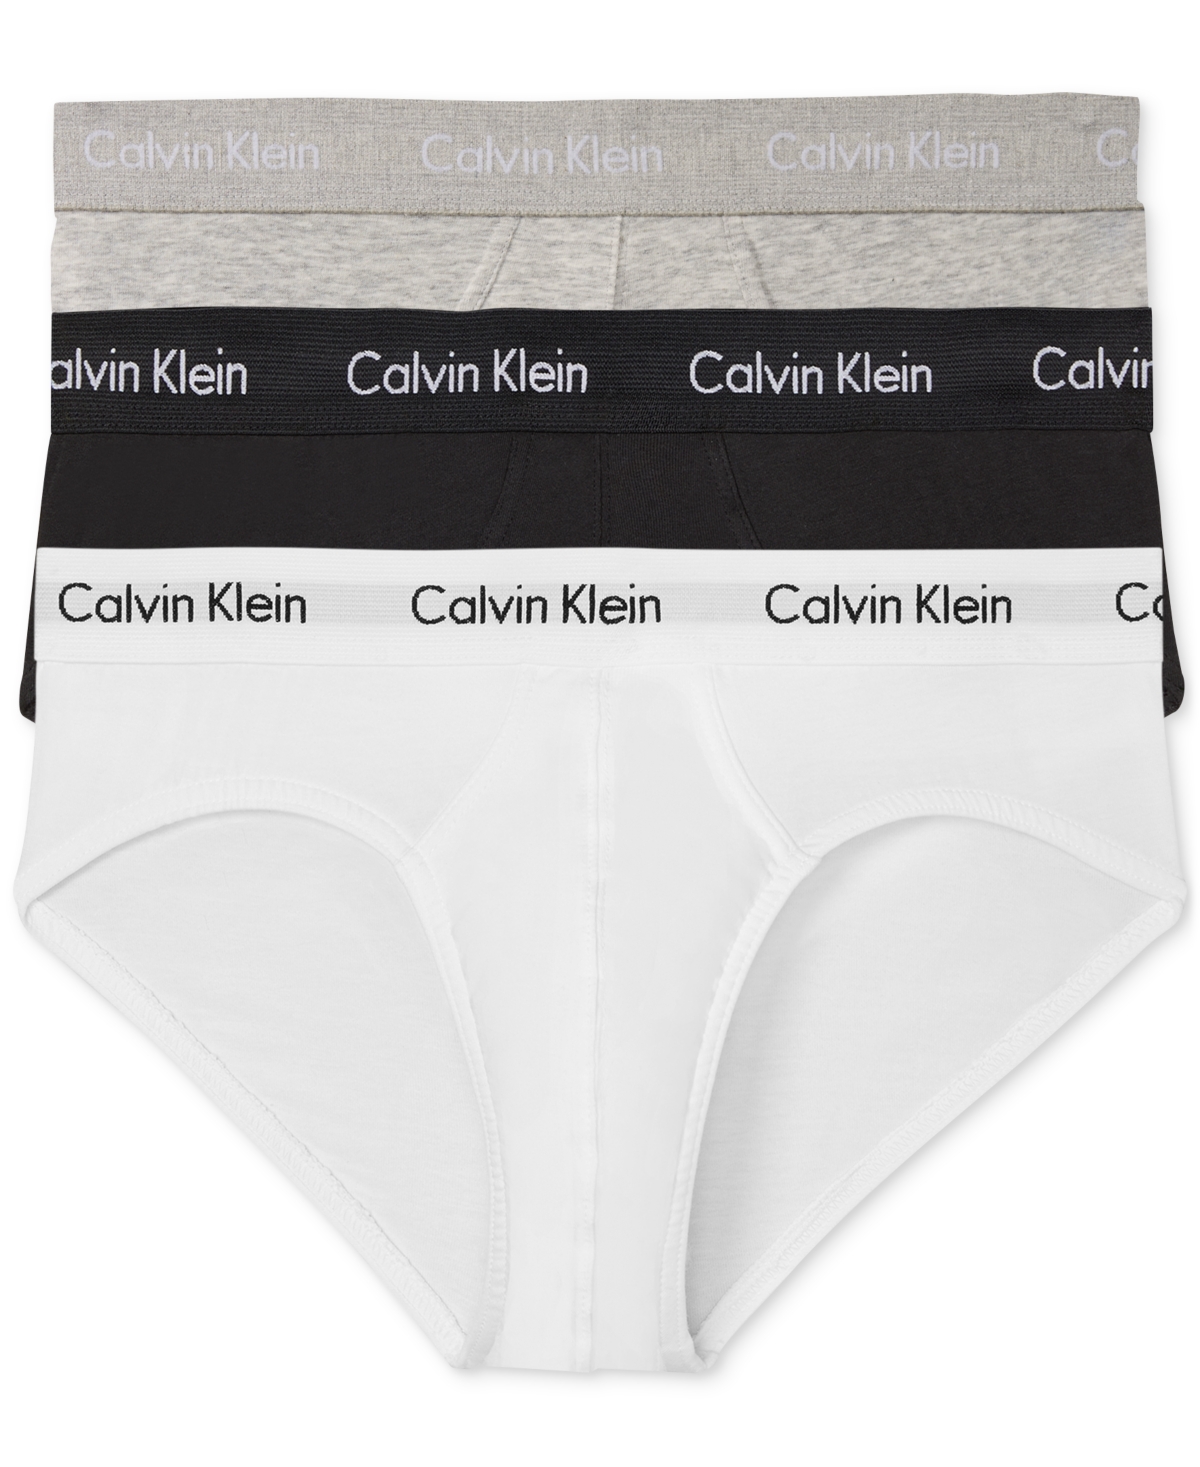 UPC 790812275702 product image for Calvin Klein Men's 3-Pack Cotton Stretch Briefs | upcitemdb.com